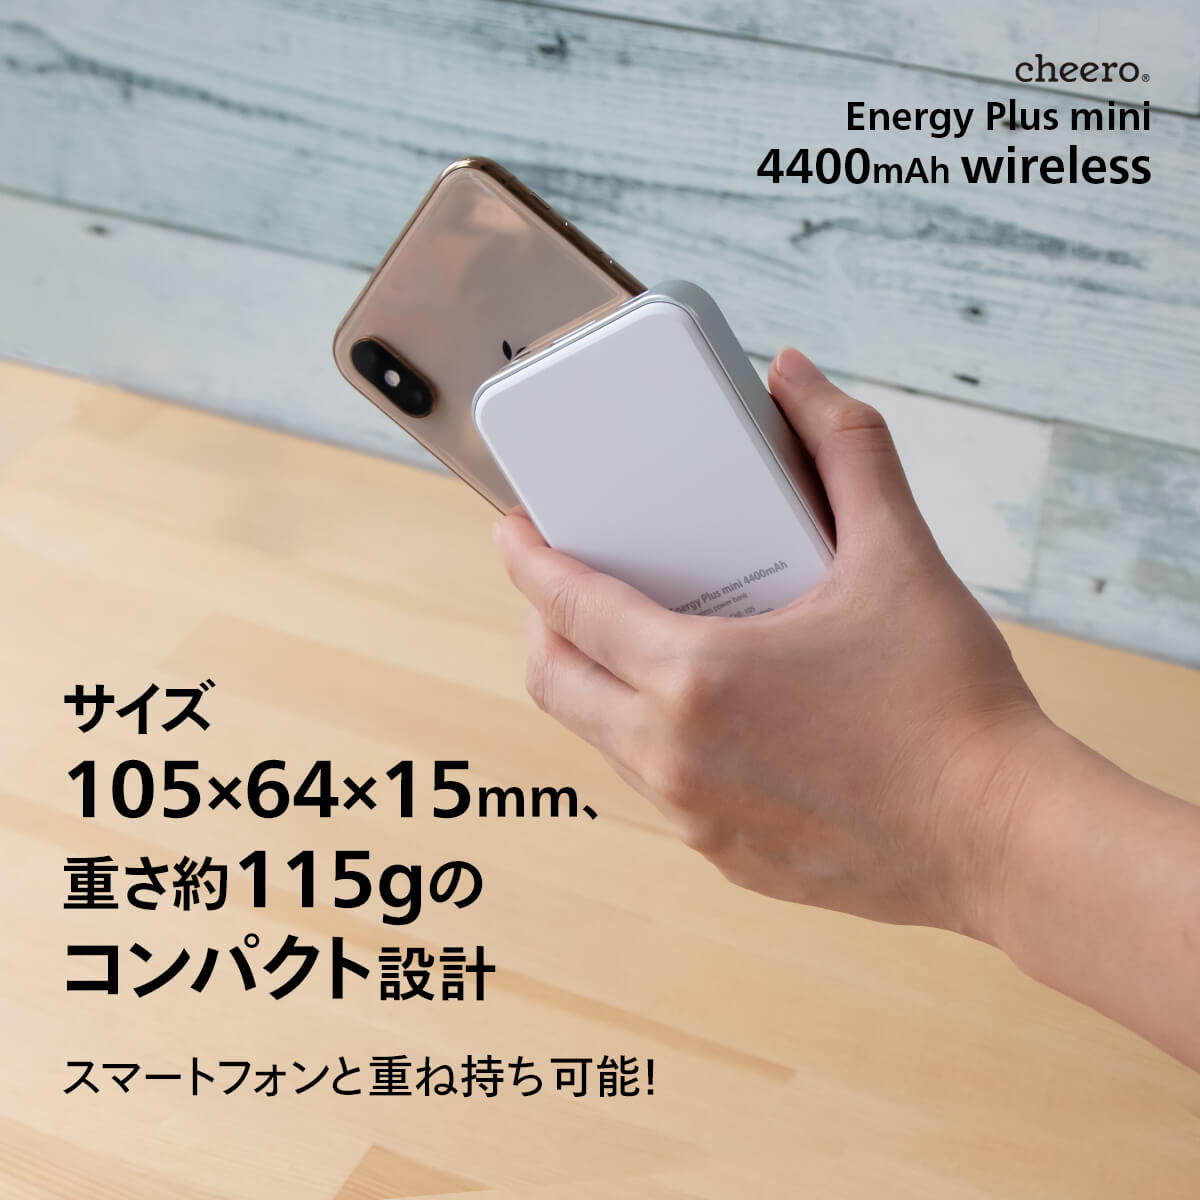 cheero Energy Plus mini Wireless 4400mAh